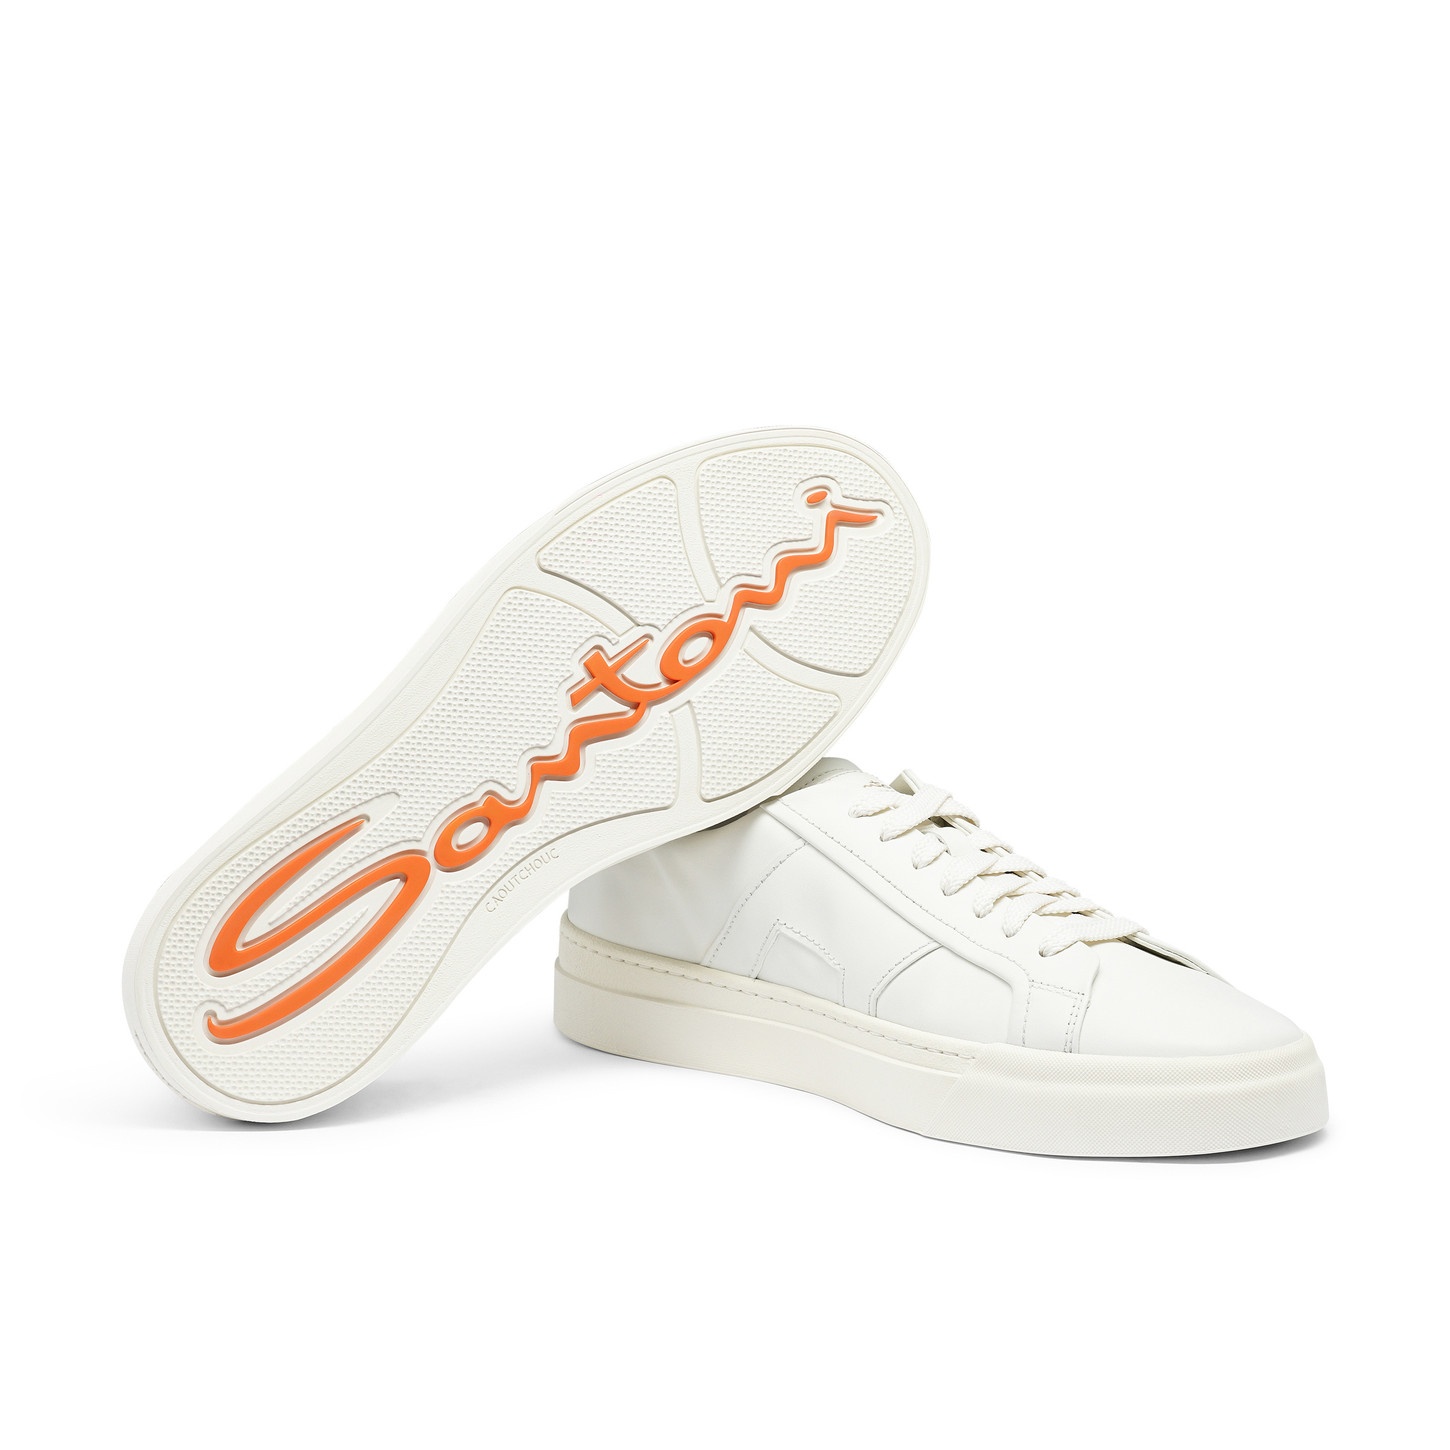 Men’s white leather double buckle sneaker - 4